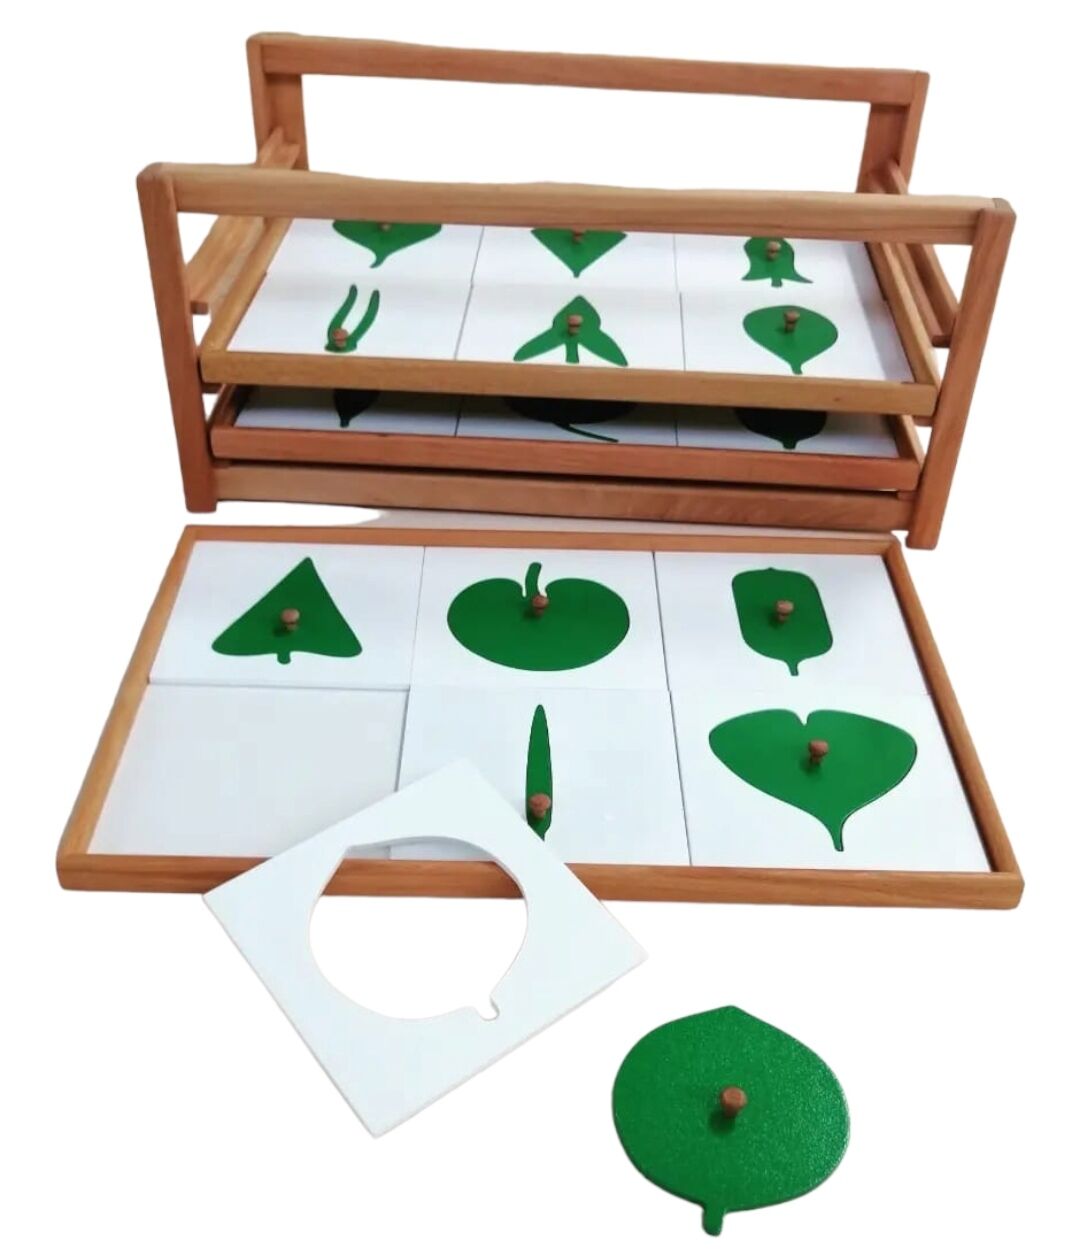 Yaprak Komodini / Leaf Cabinet